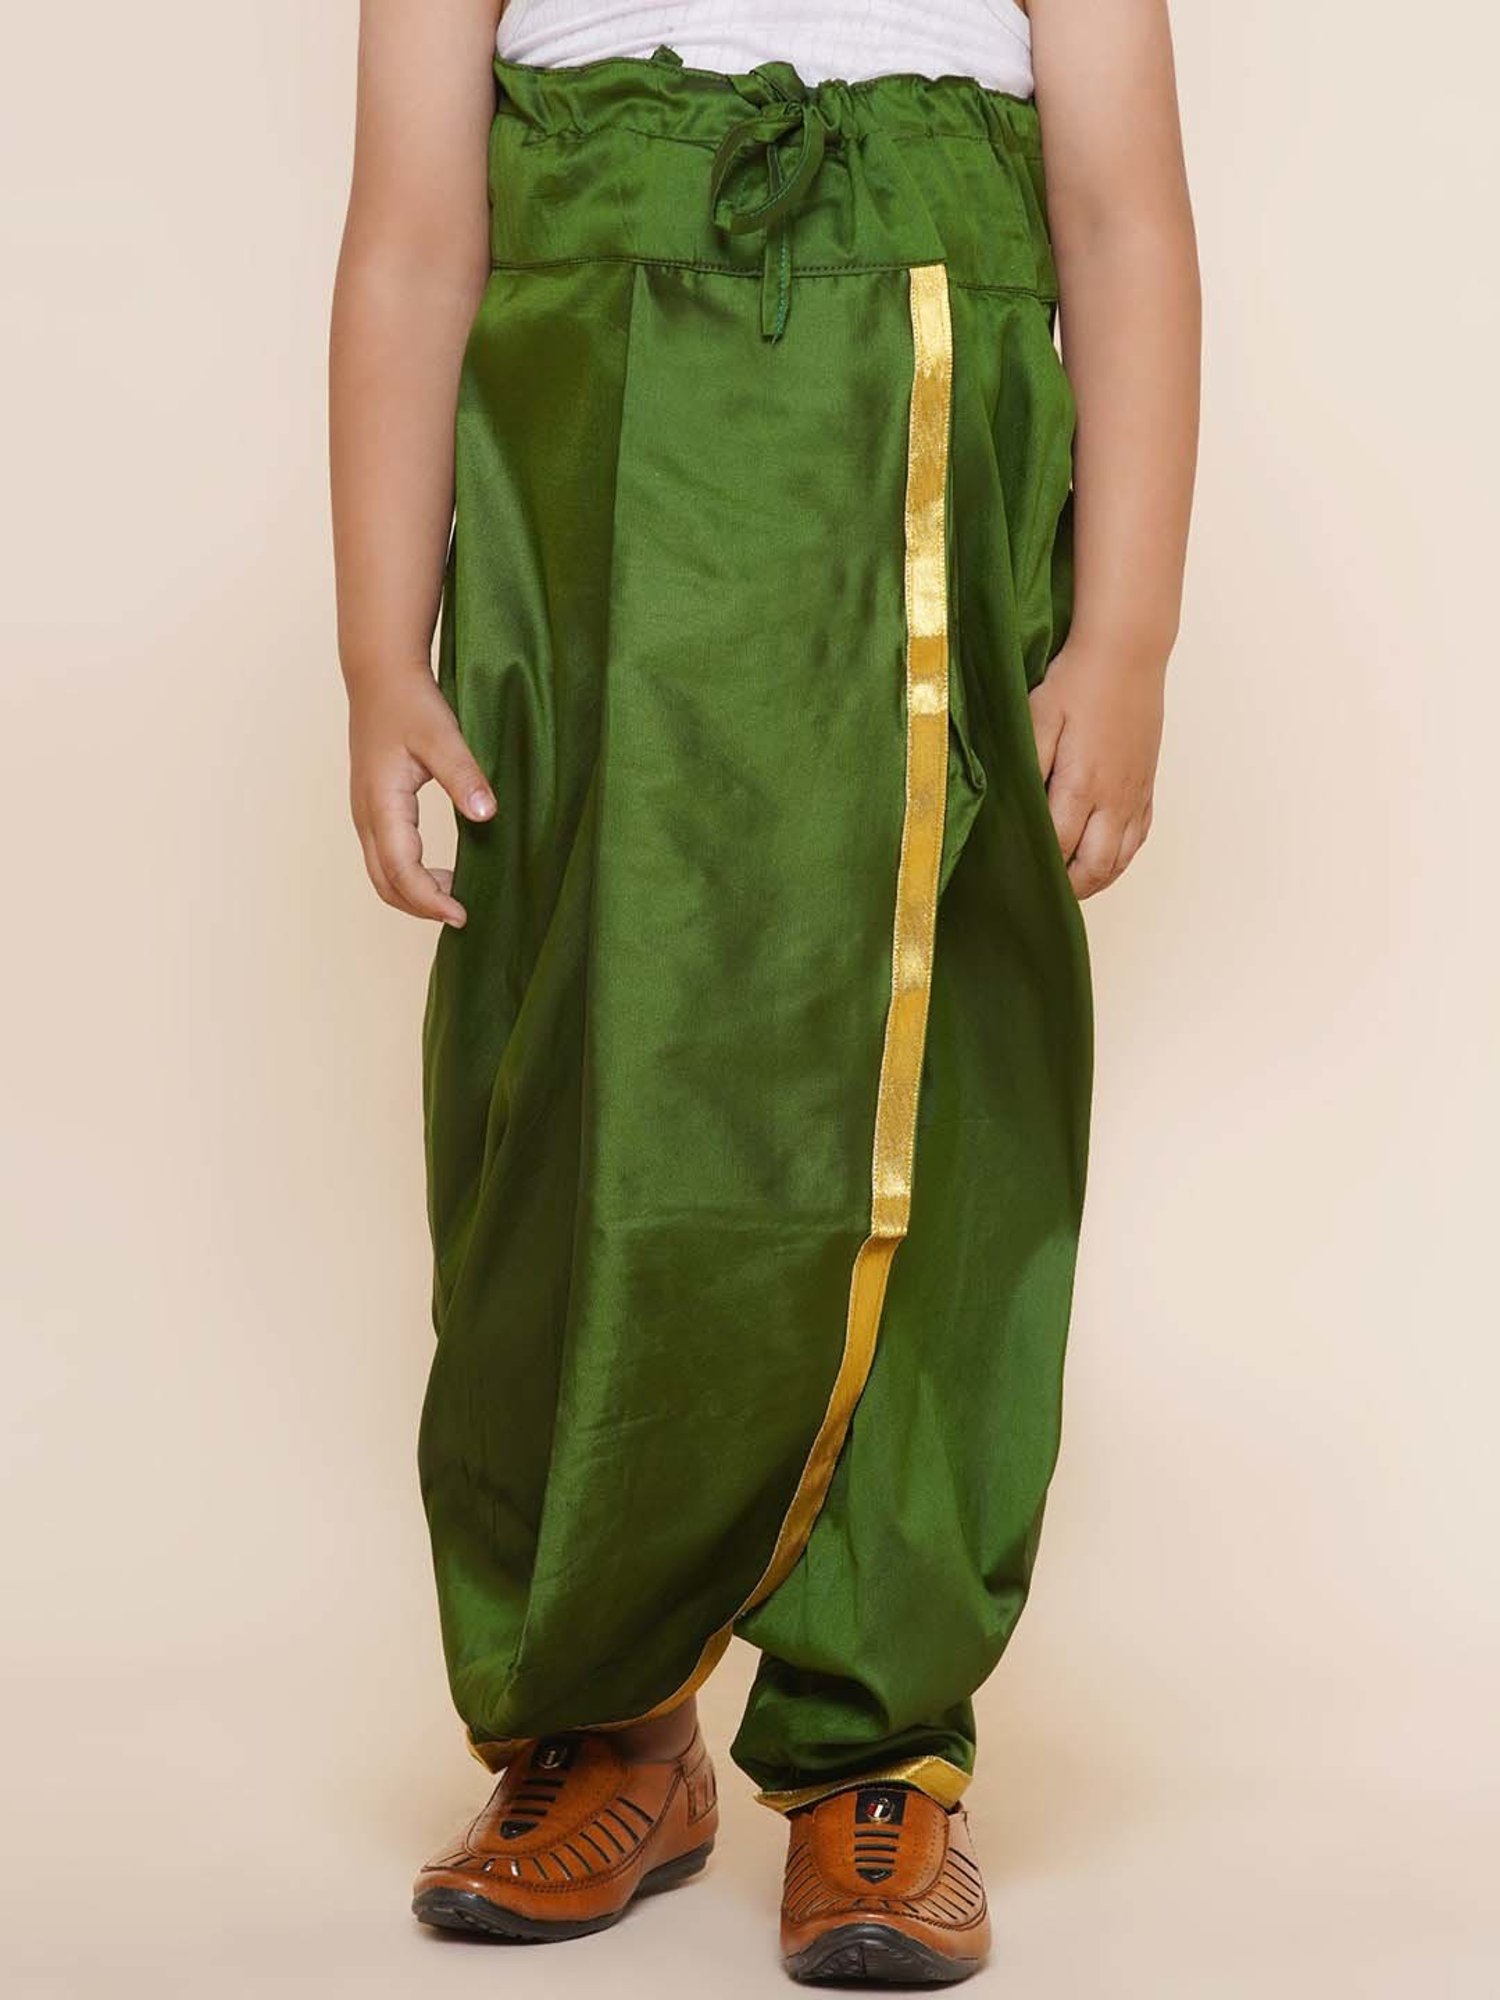 Boys Kids Ethnic Maroon Cotton Silk Blend Kurta Dhoti Pants Wedding Party  Kurta | eBay